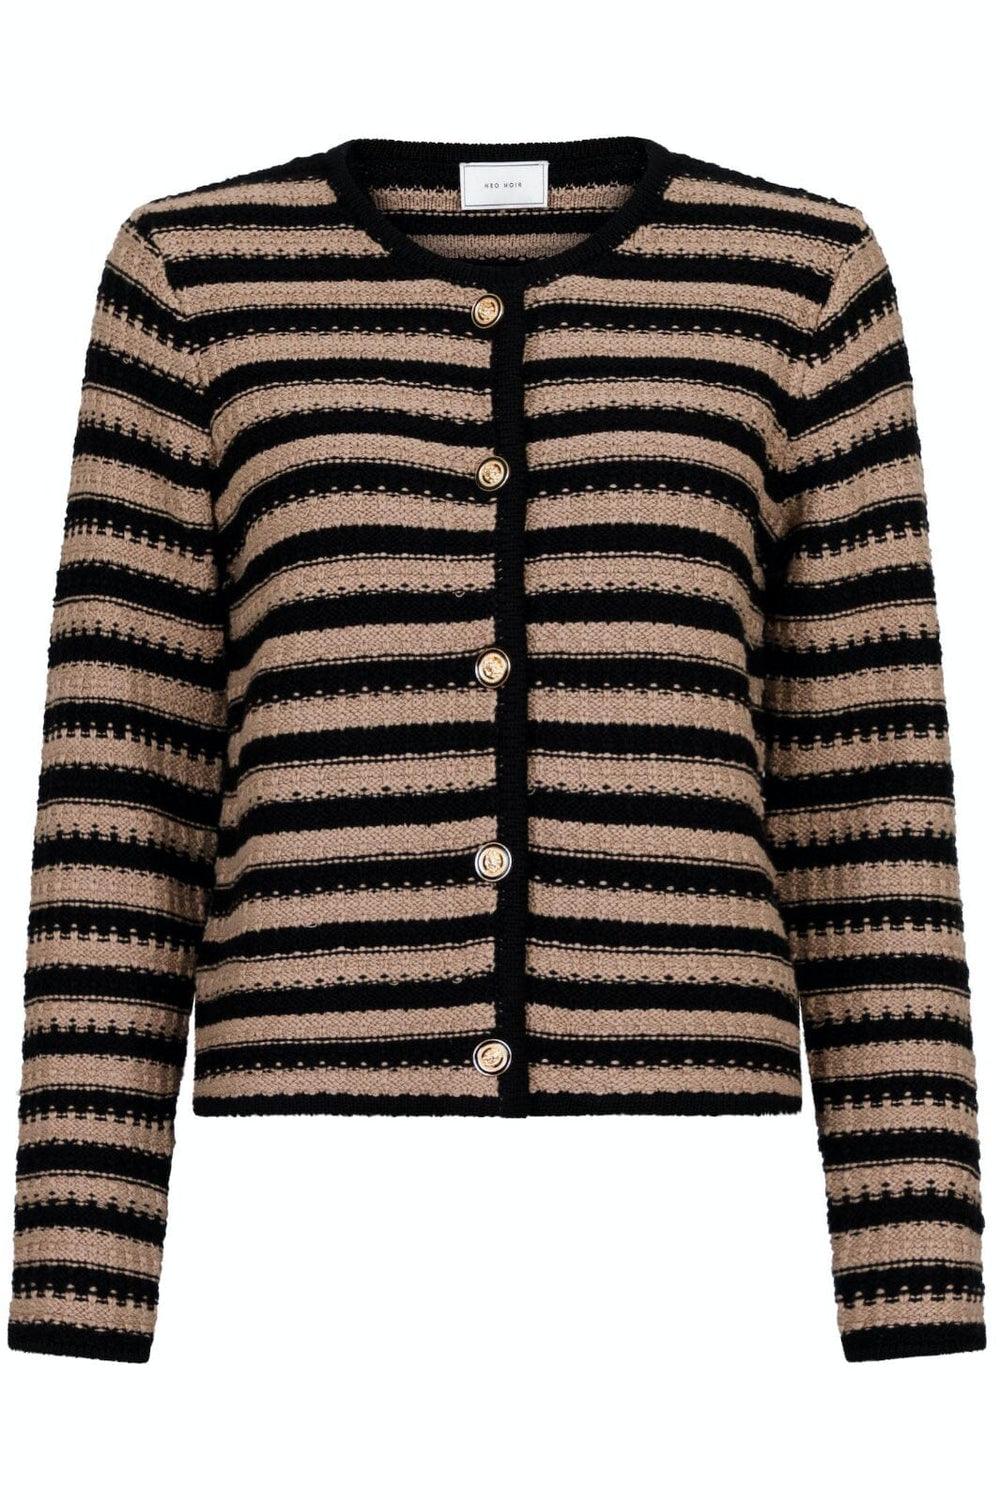 Neo Noir - Limone Stripe Knit Jacket - Taupe Cardigans 